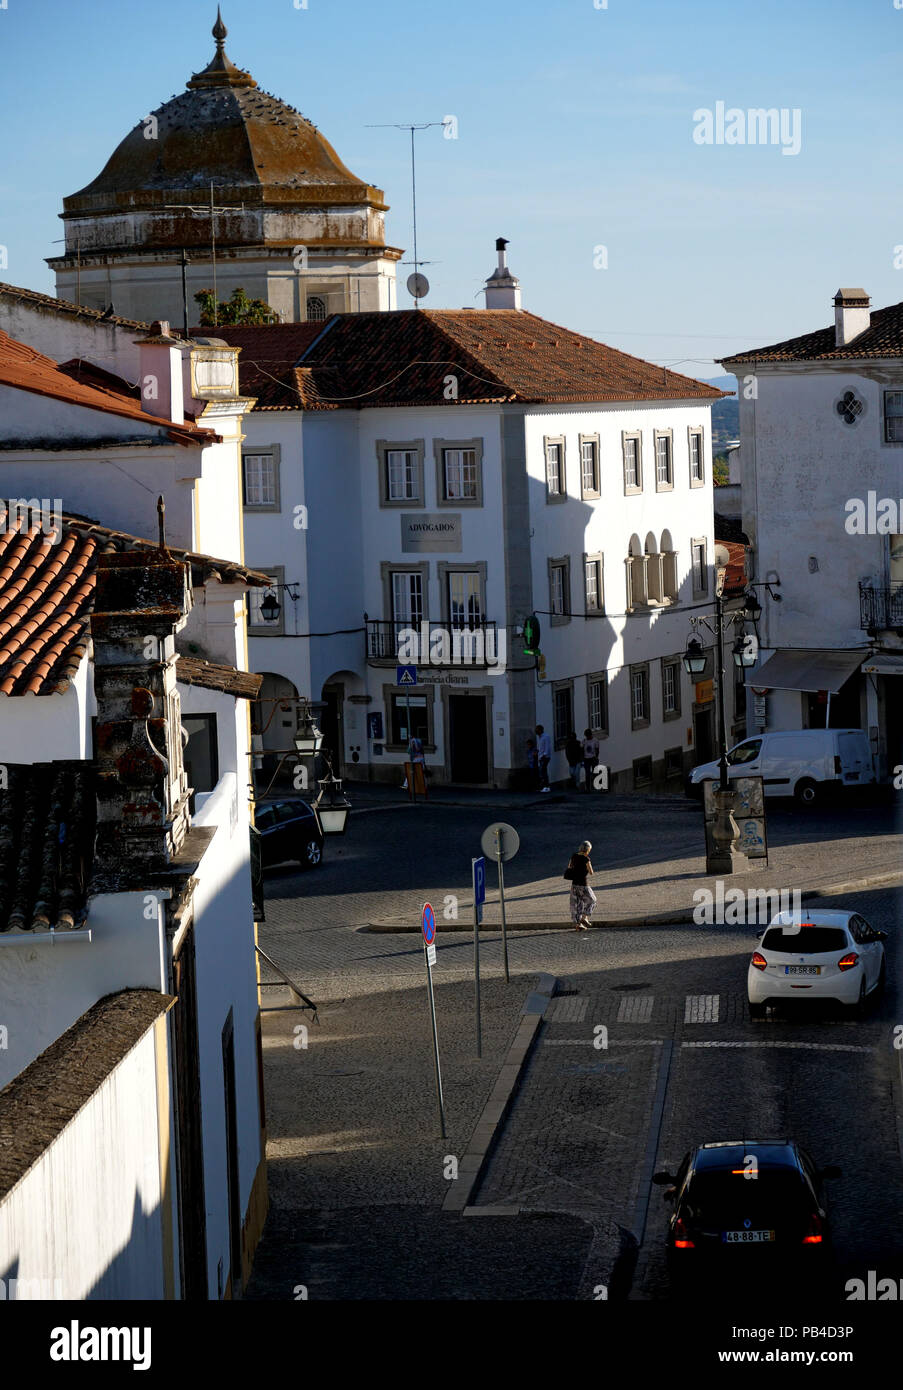 Town square in the wallad city of Evora, Portugal Stock Photo